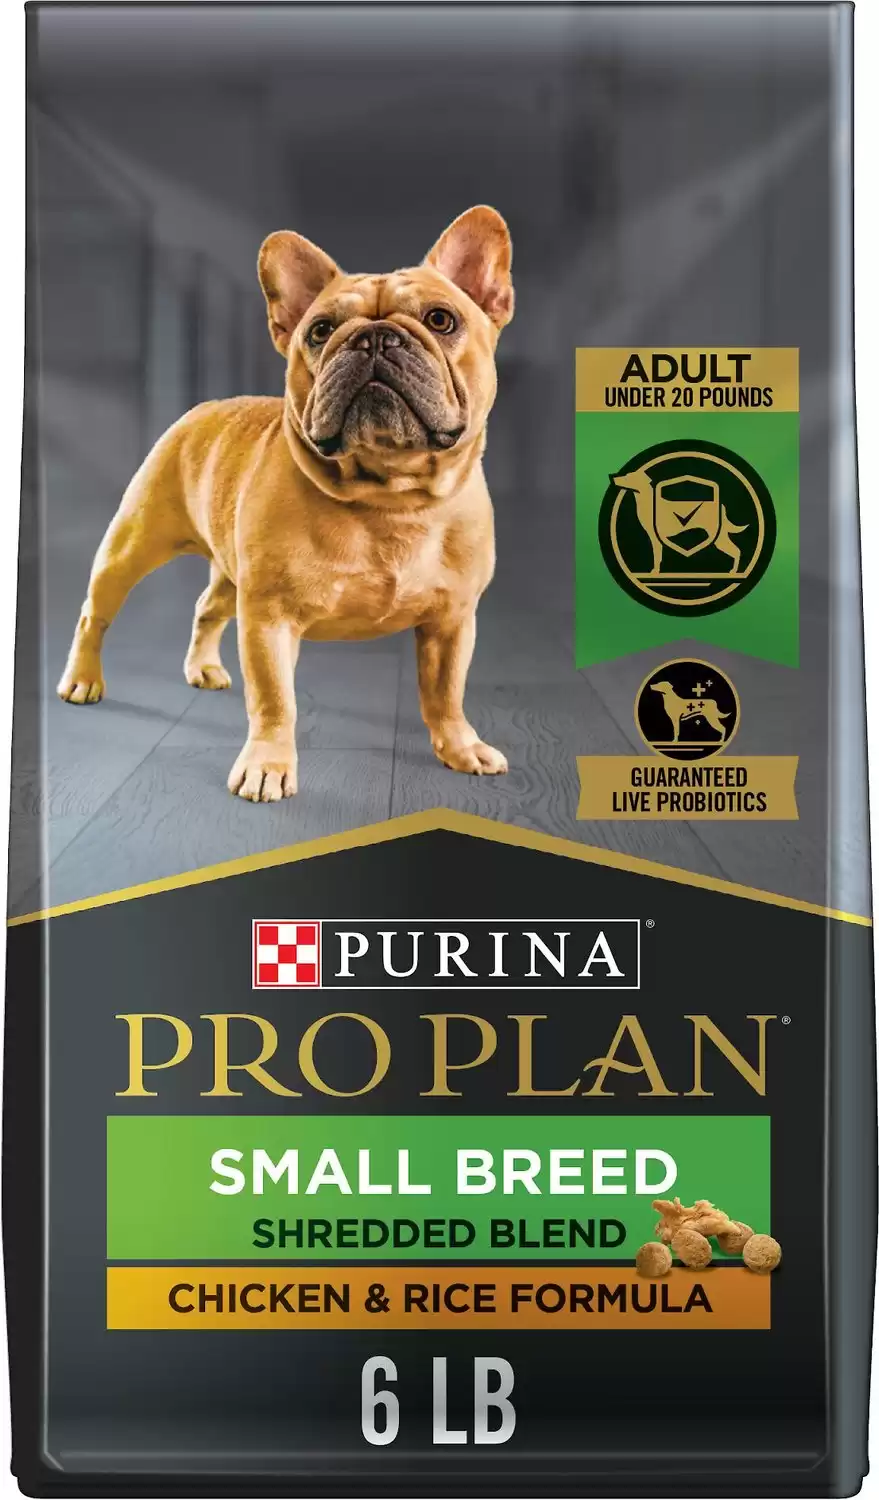 Purina Pro Plan Small Breed Shredded Formula Adult Dry Dog Food